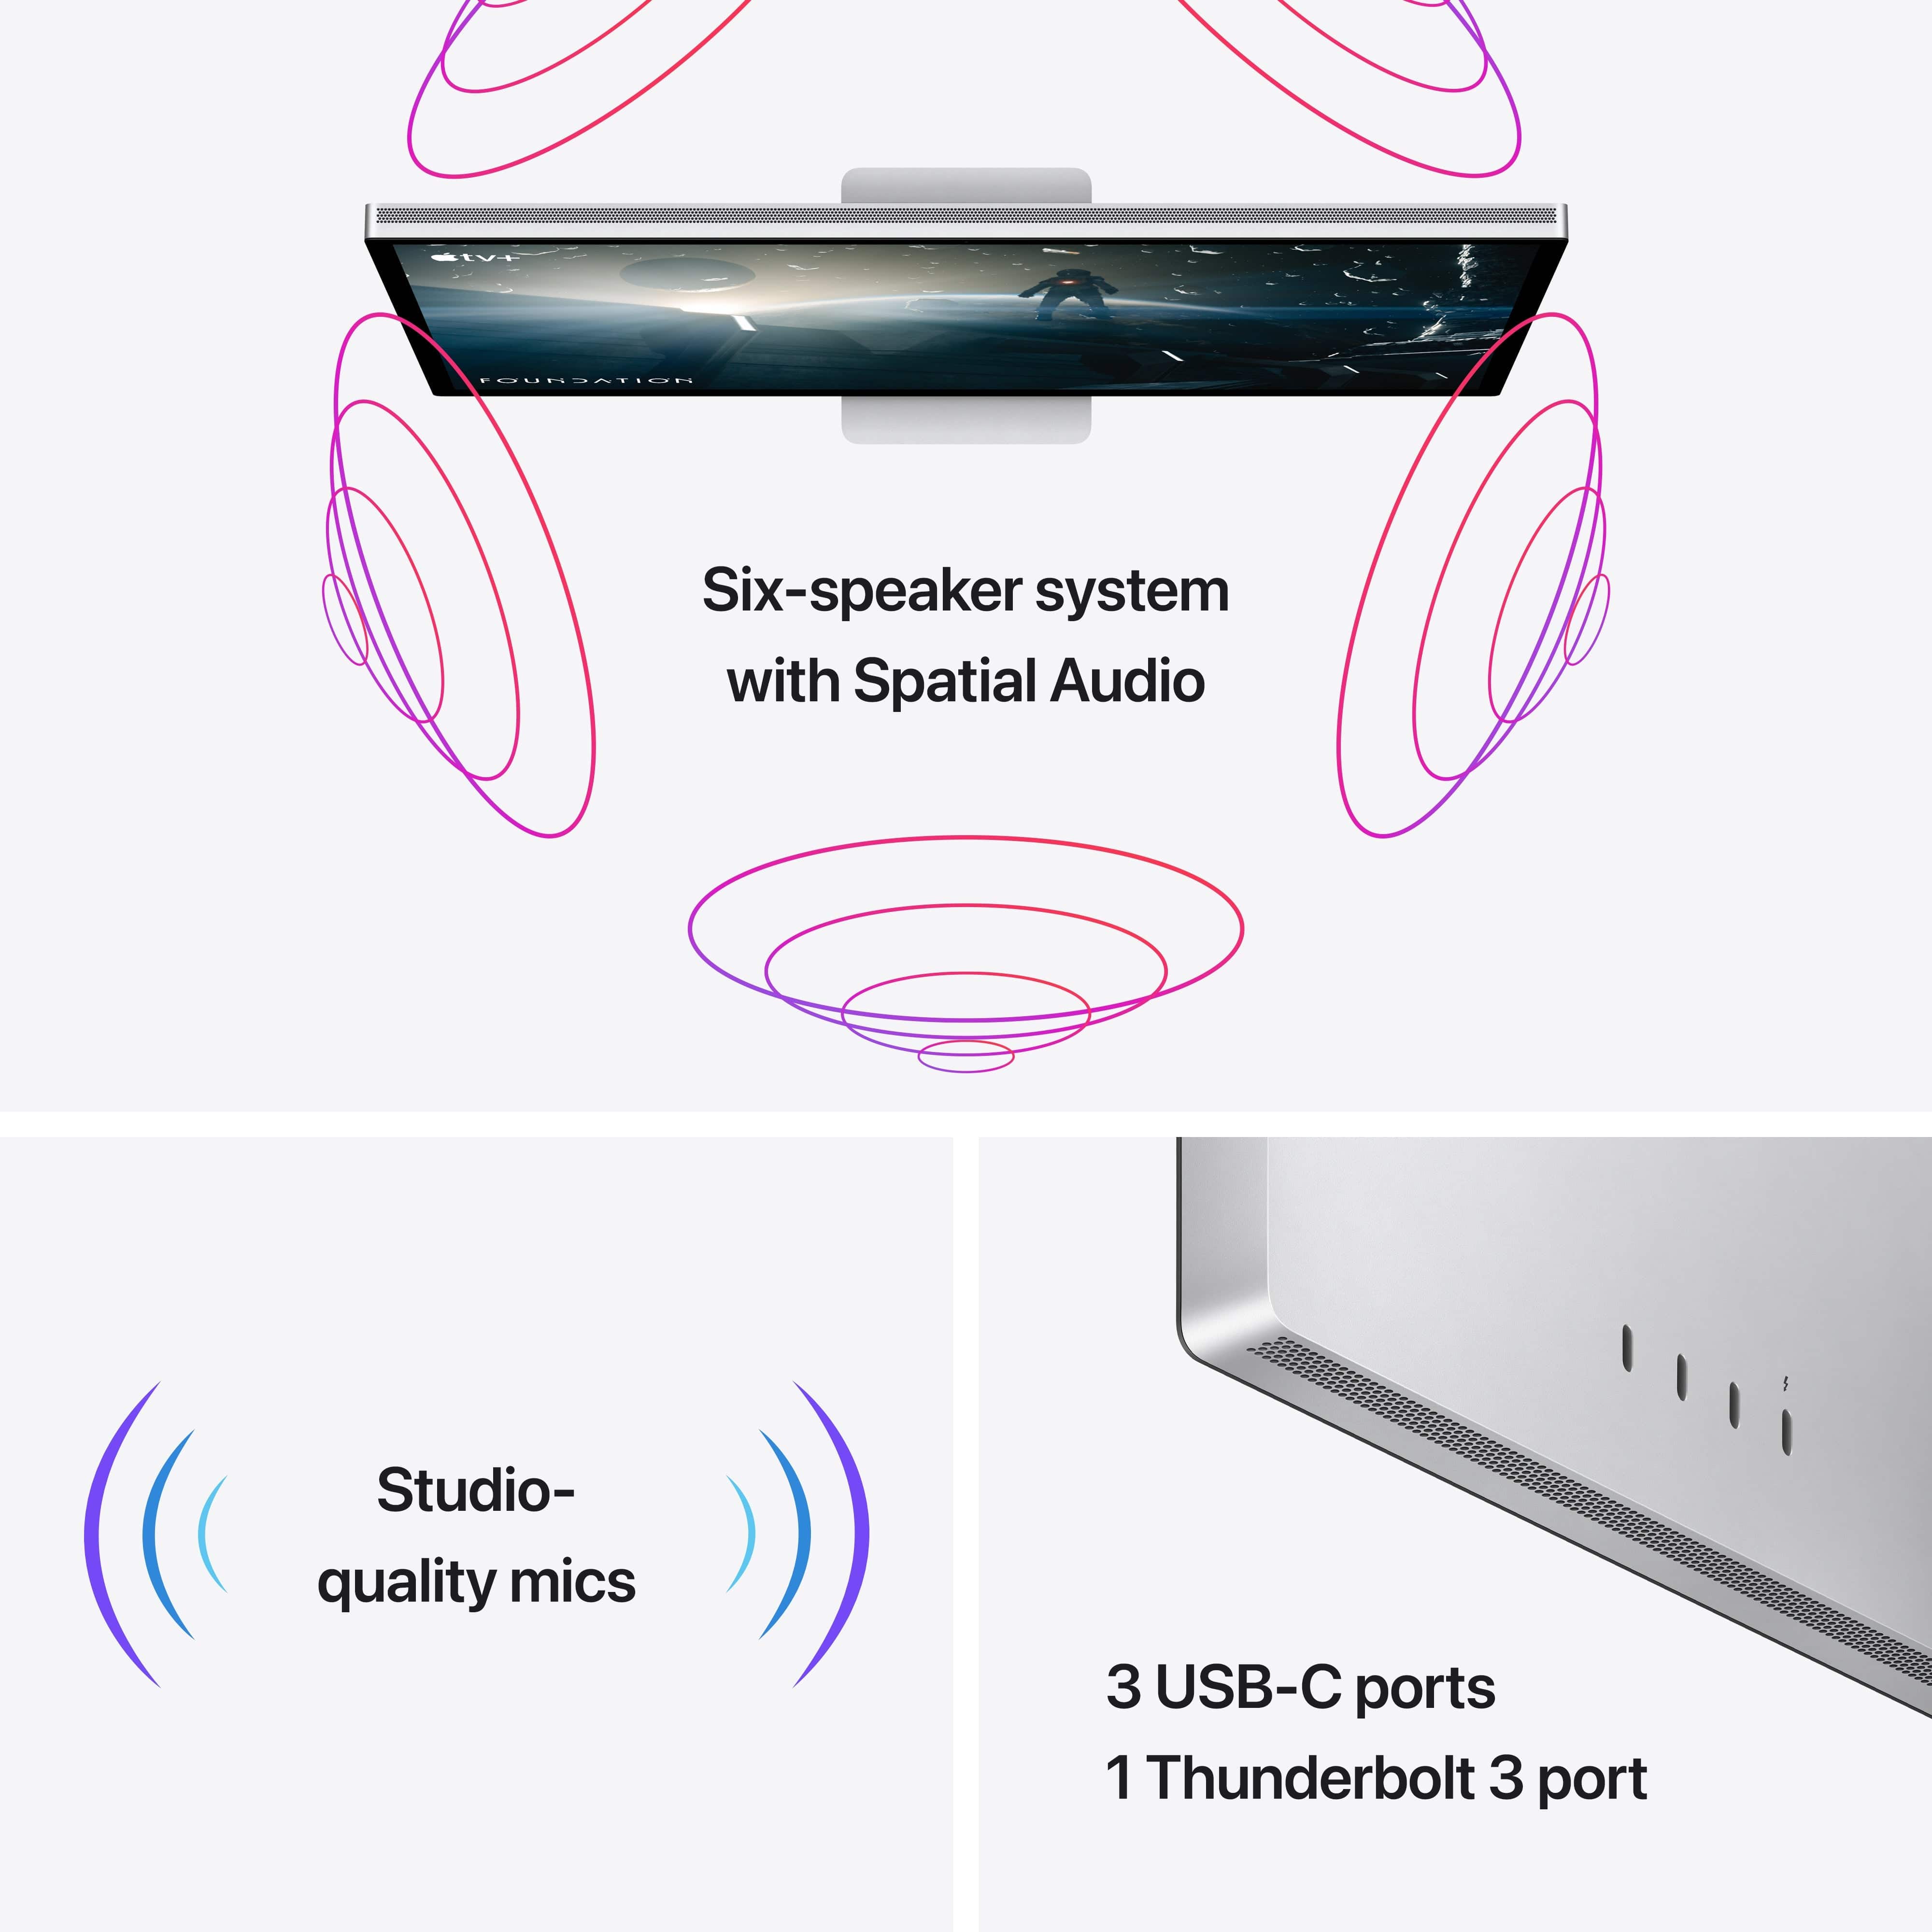 Apple Studio Display - Nano-Texture Glass - VESA Mount Adapter (Stand not included)